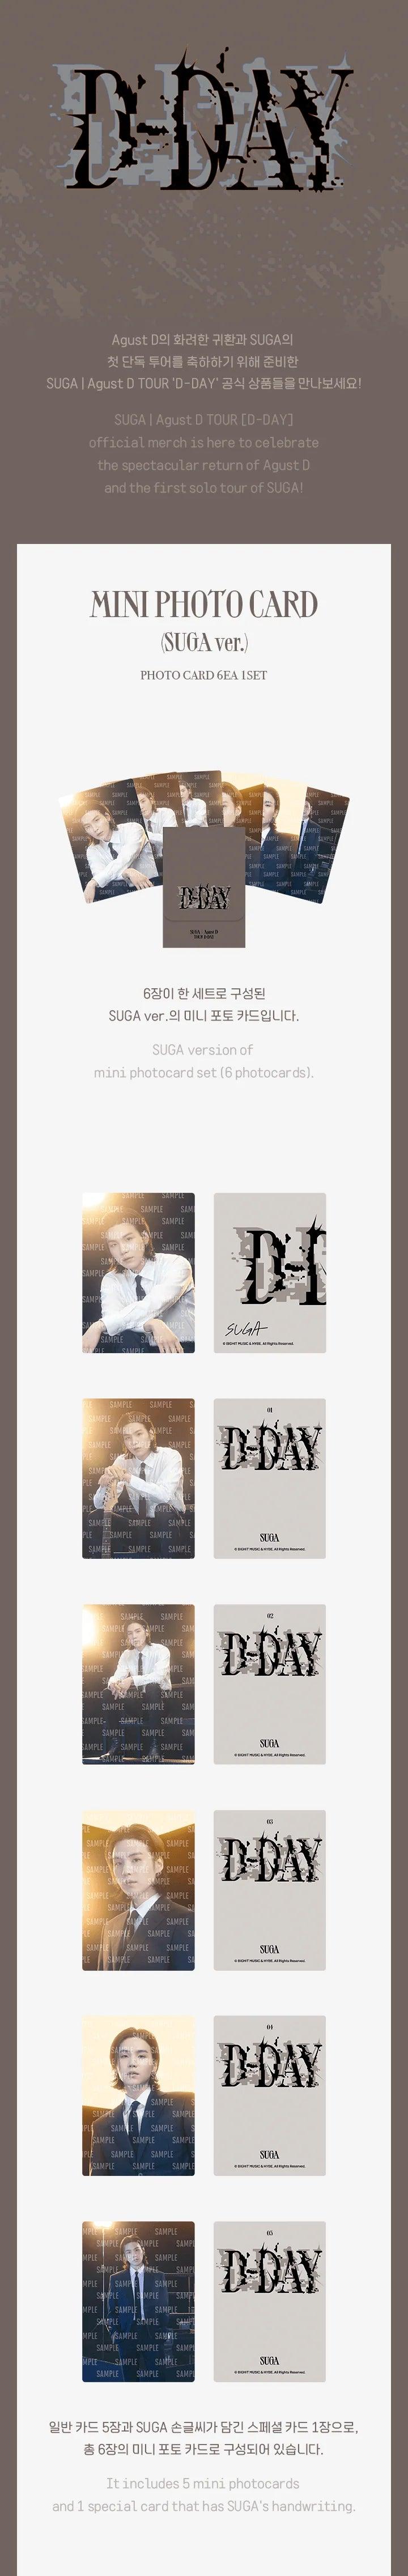 BTS SUGAㅣAGUST D [TOUR D-DAY OFFICIAL MD] Mini Photo Card (SUGA ver.) - KAEPJJANG SHOP (캡짱 숍)